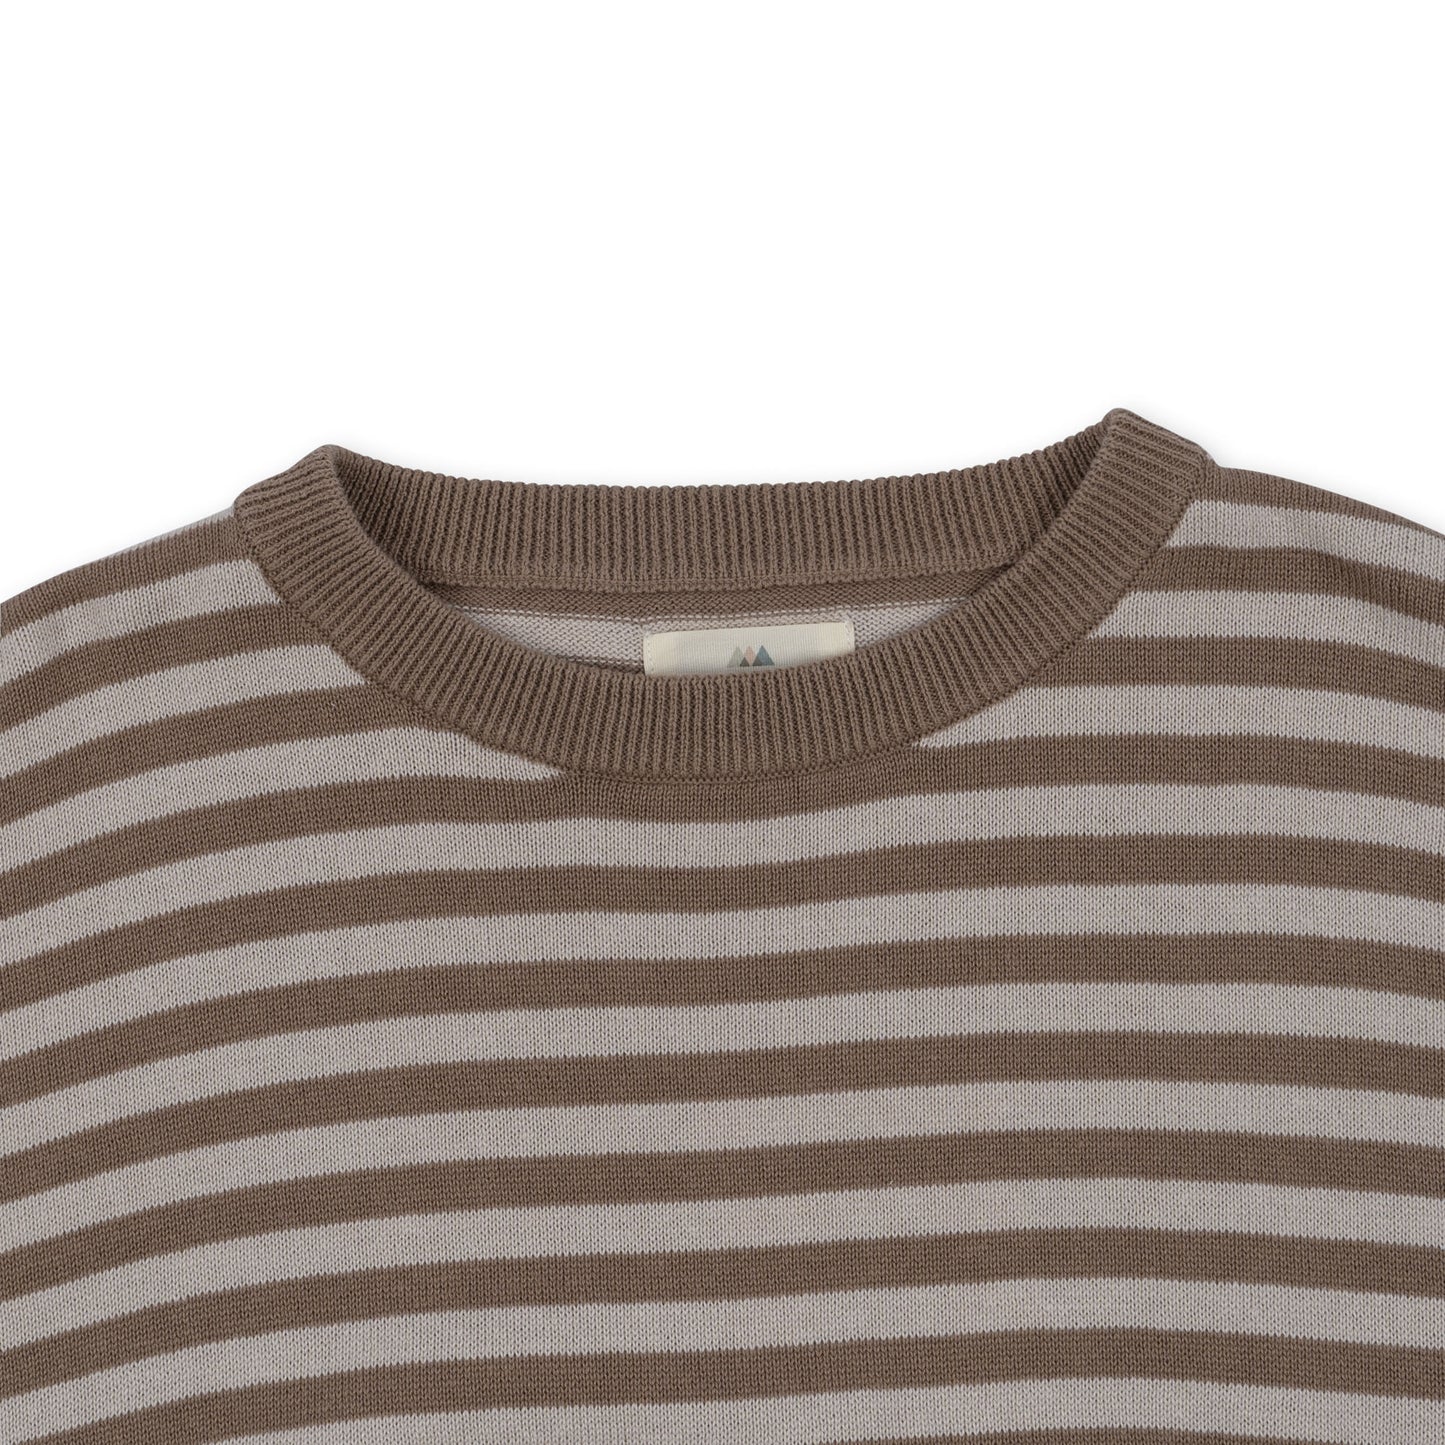 Loui knit blouse - Brown melange